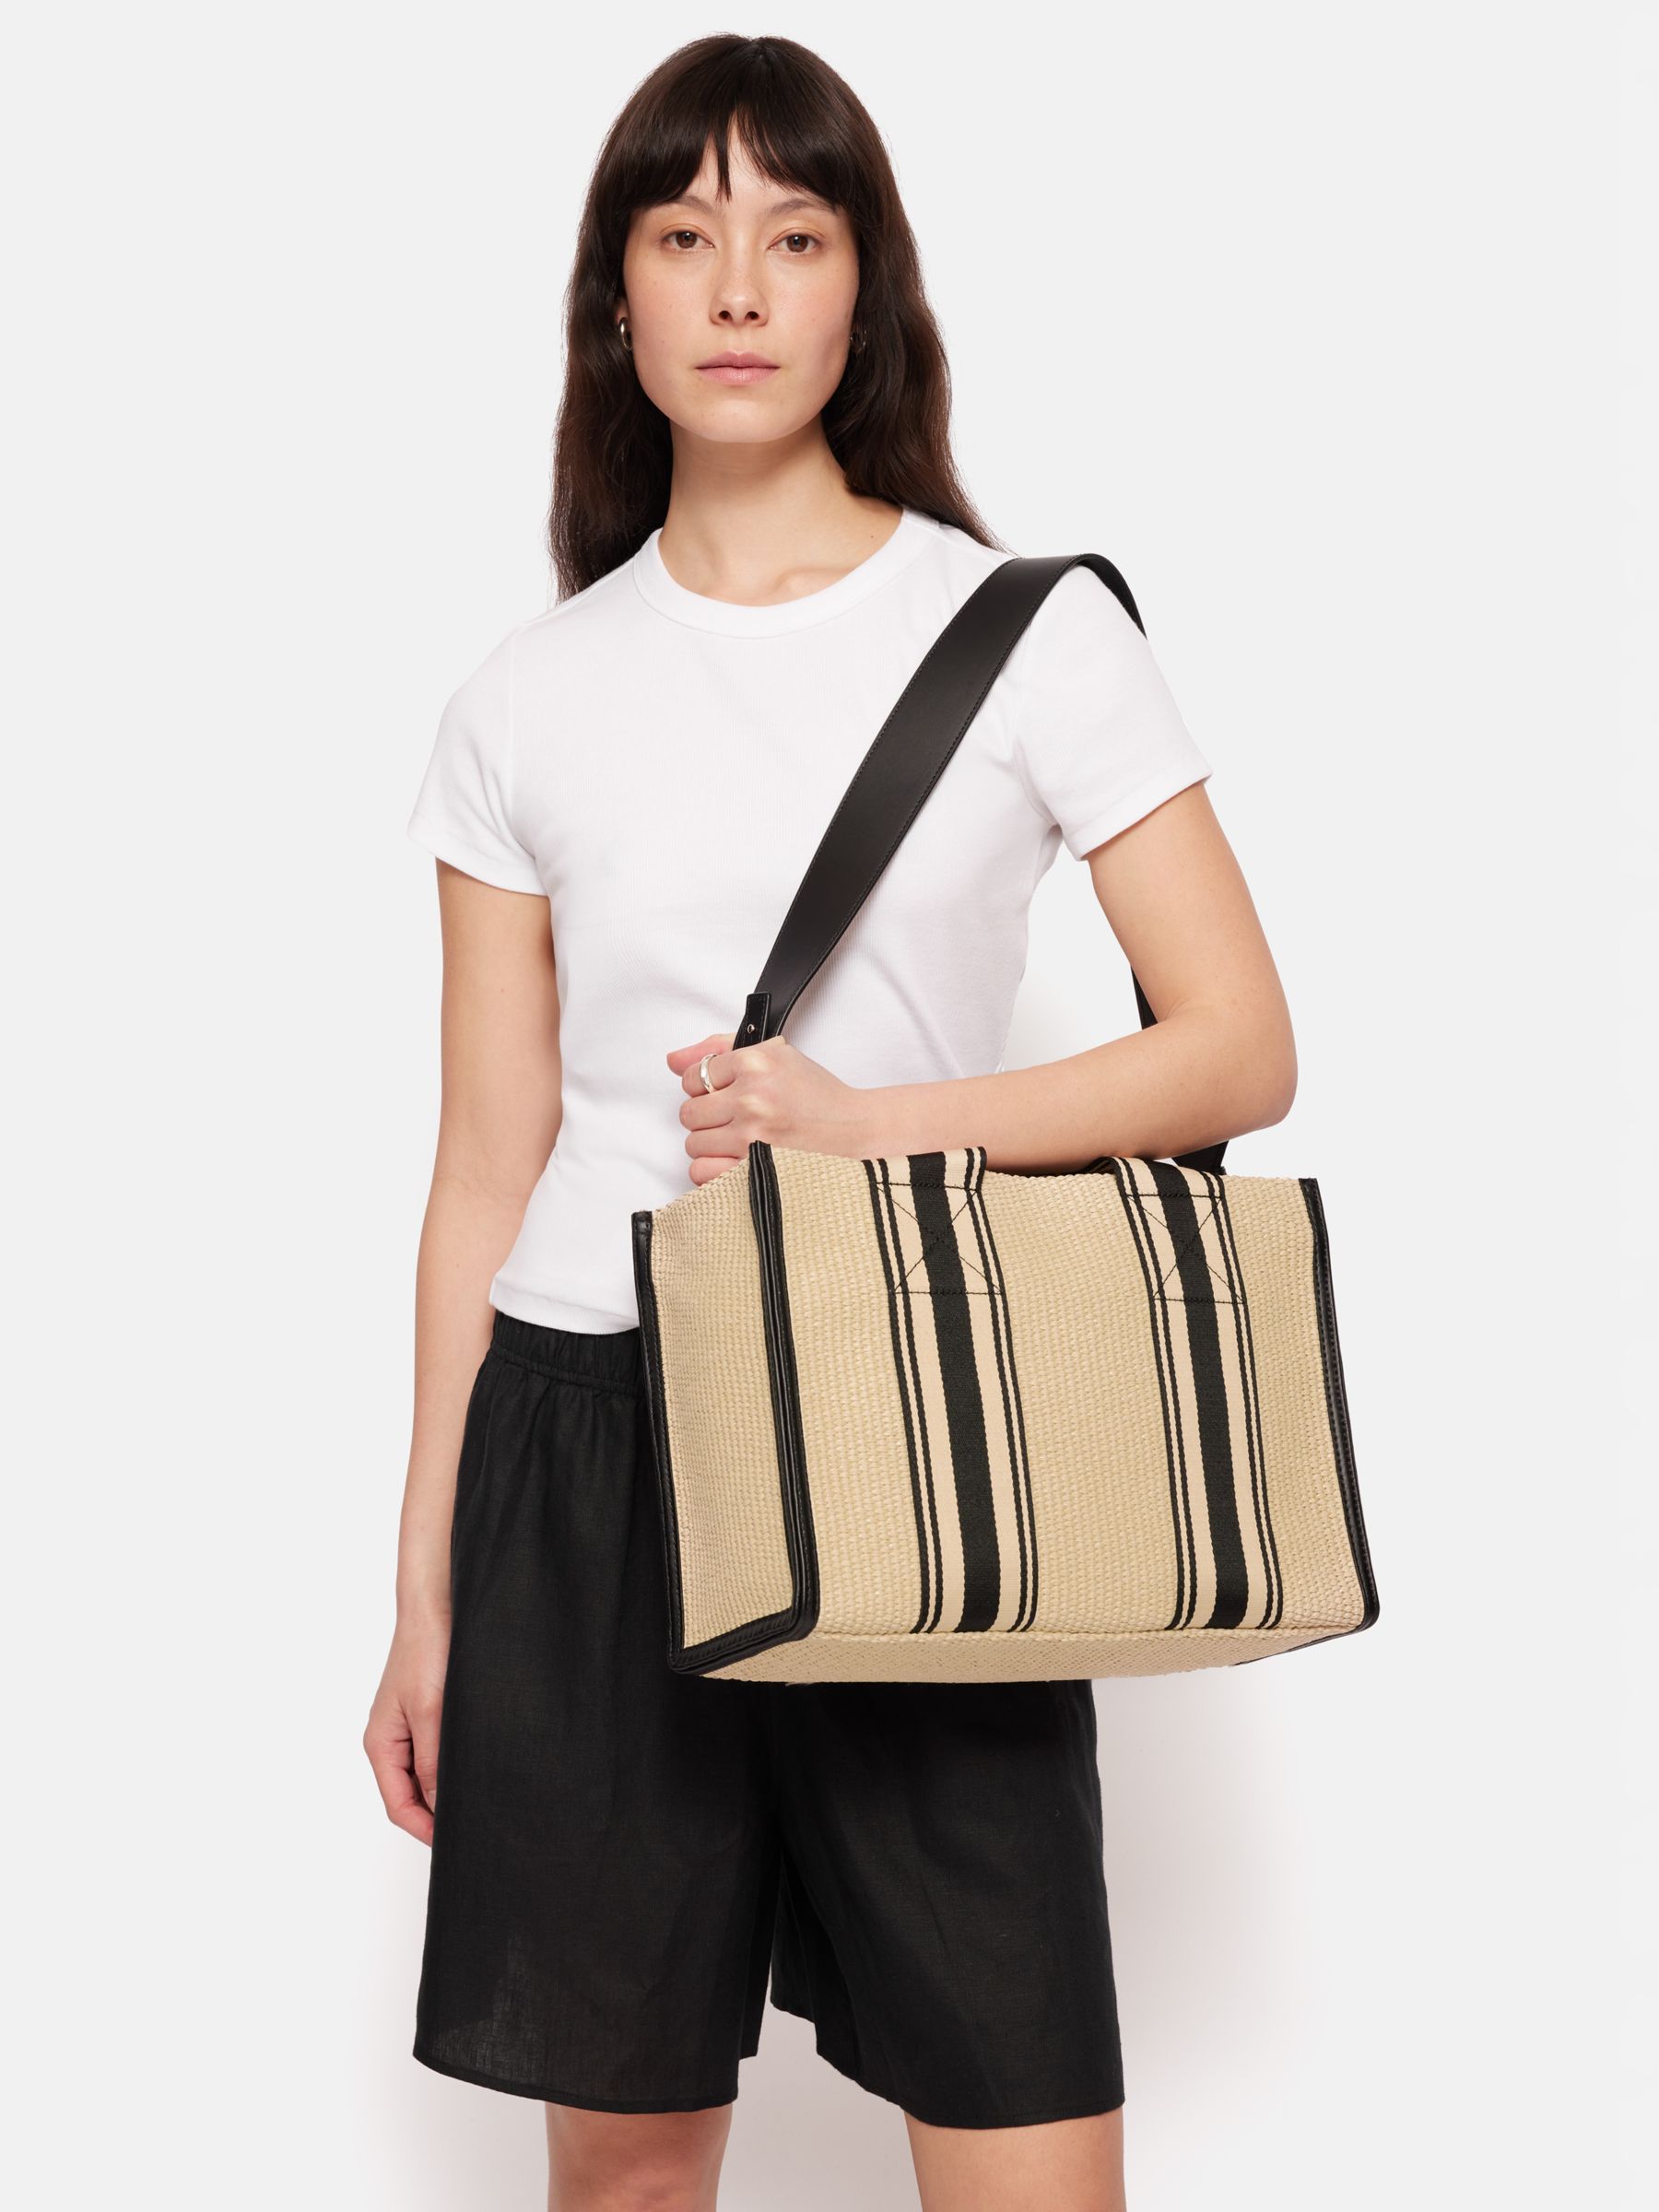 Jigsaw Athena Stripe Woven Tote Bag, Natural/Black, One Size